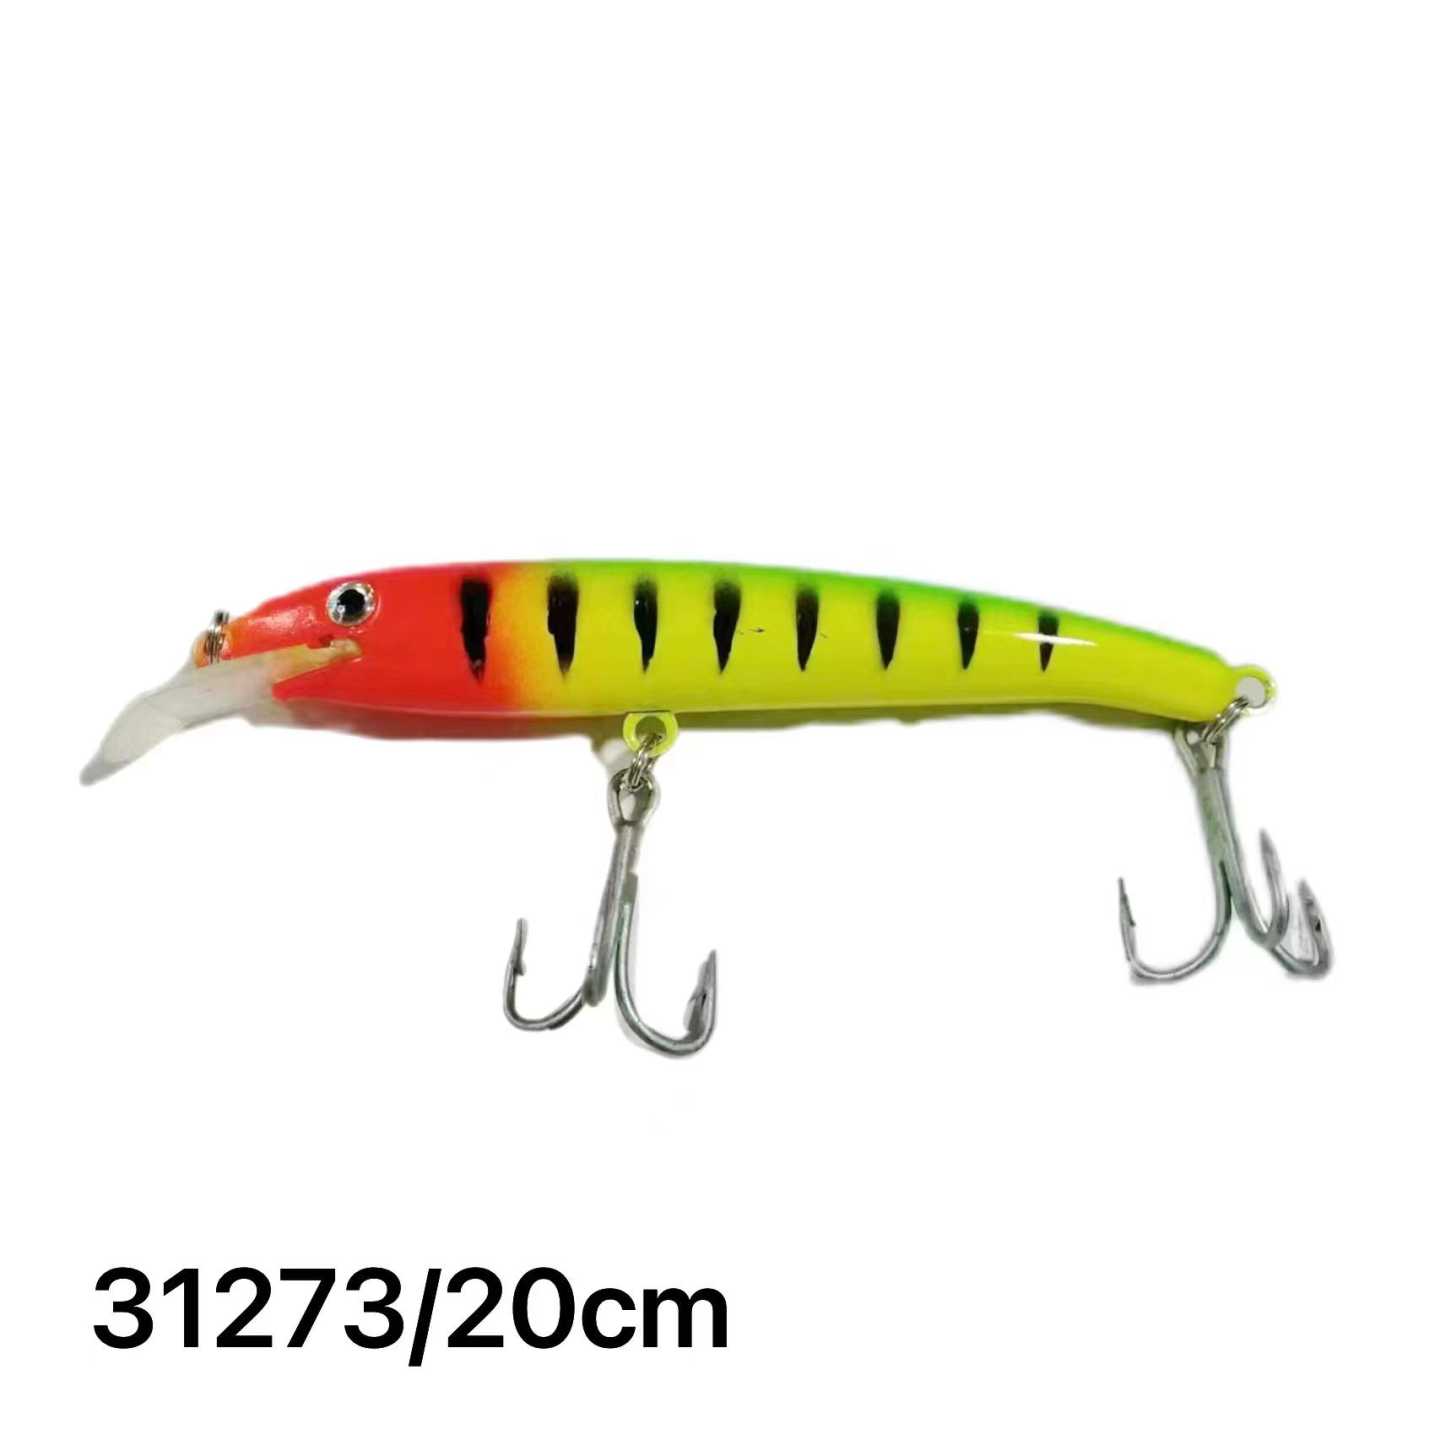 Artificial bait with tongue - 20cm - 31273